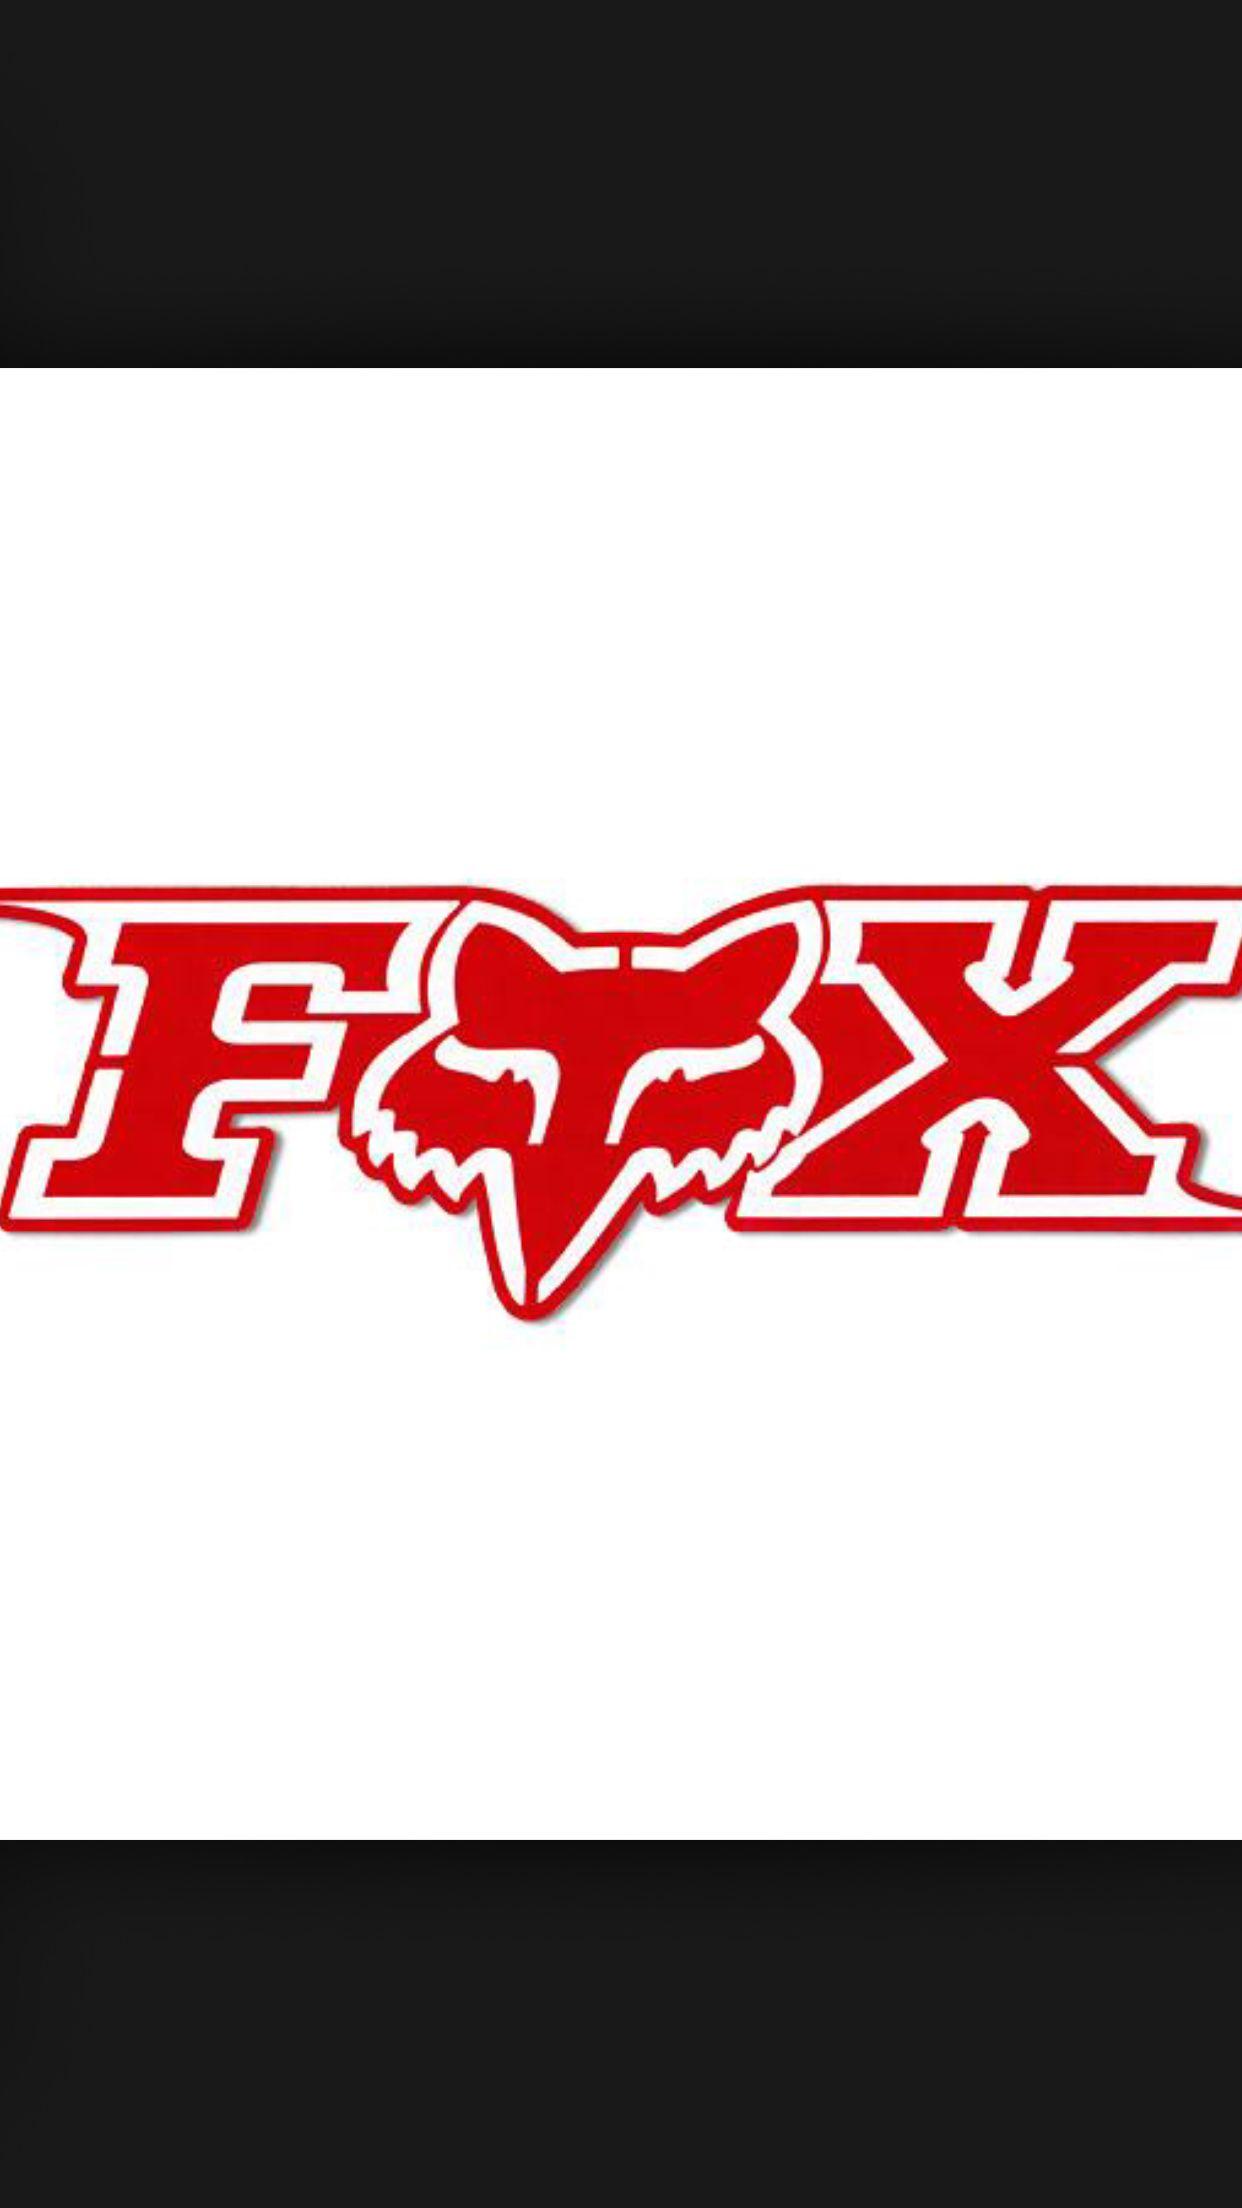 Red and White Racing Logo - Atv_Clothes. Fox racing, Racing, Fox